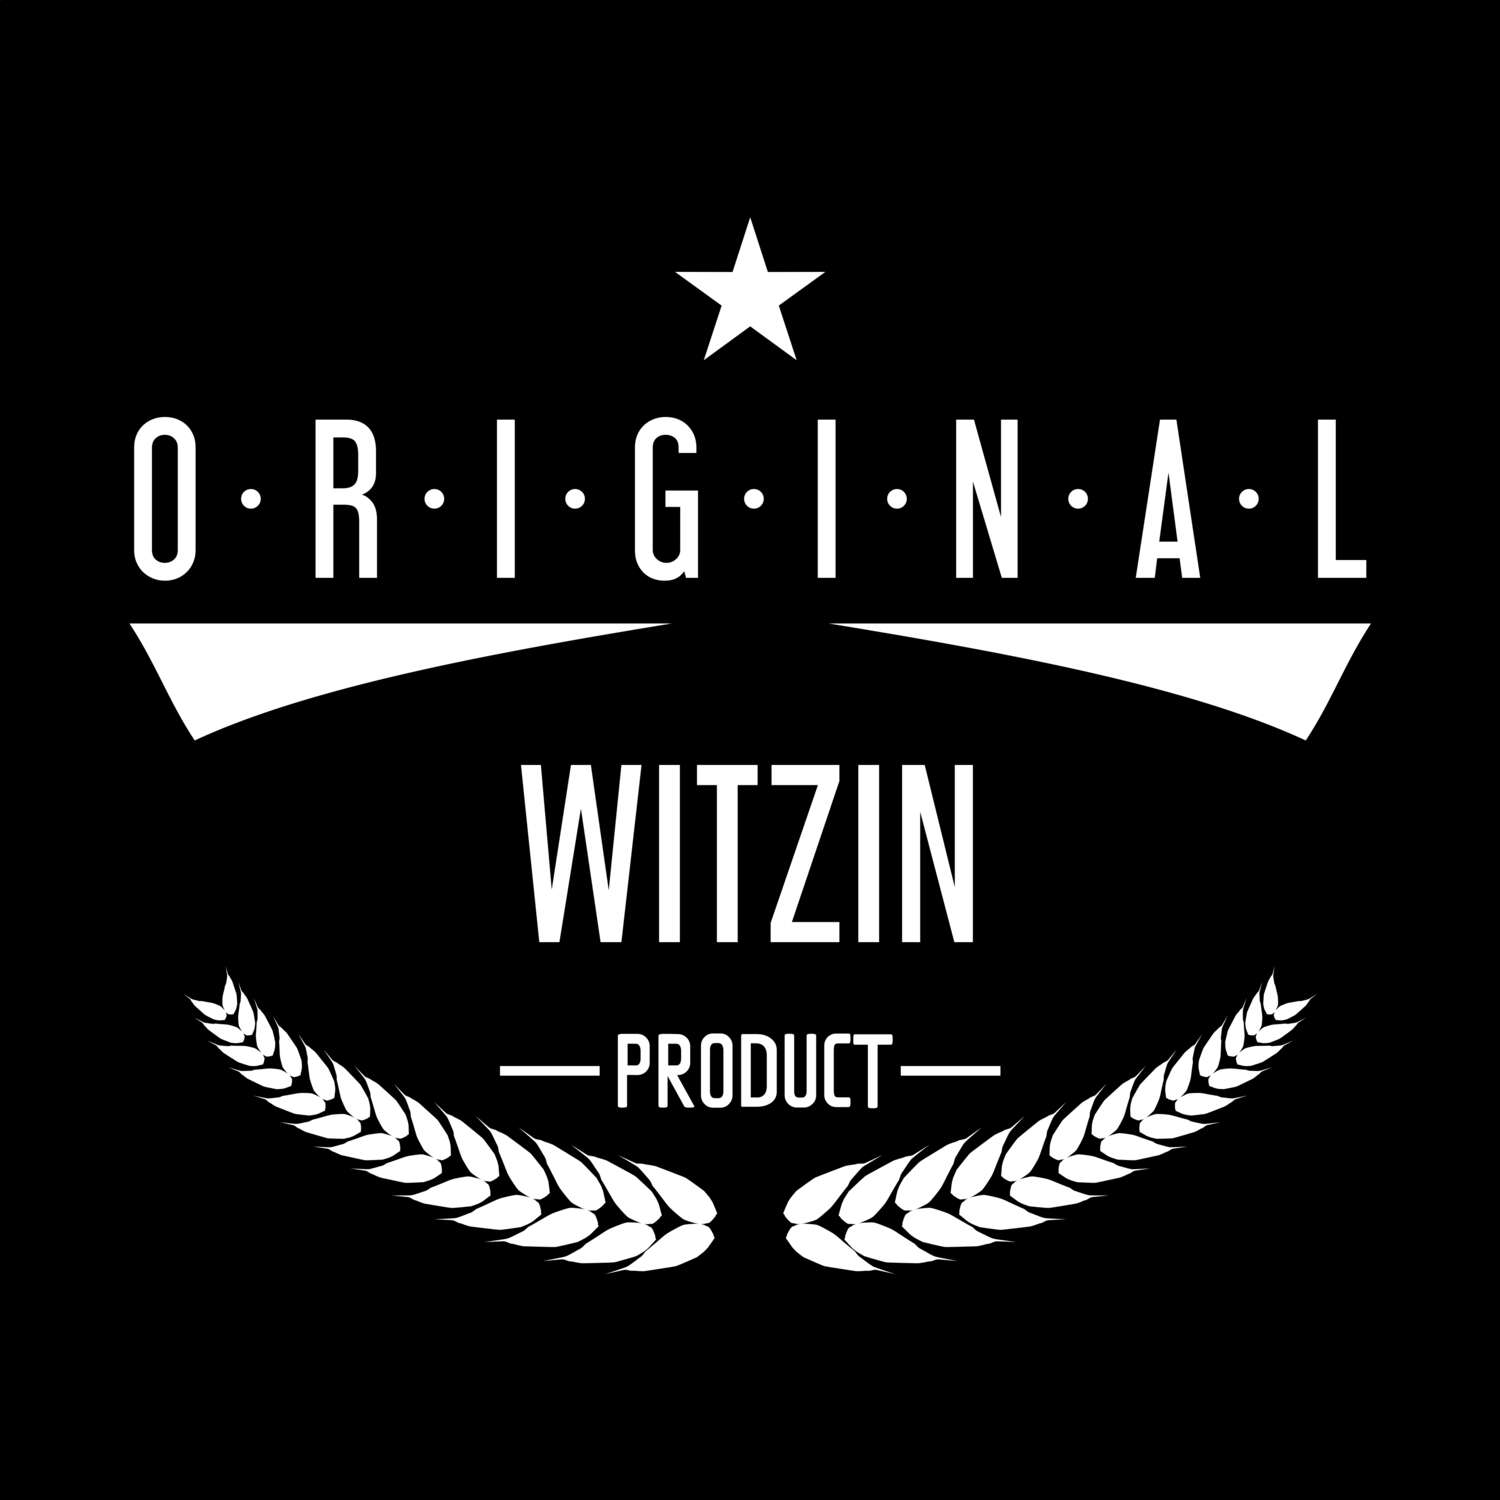 Witzin T-Shirt »Original Product«